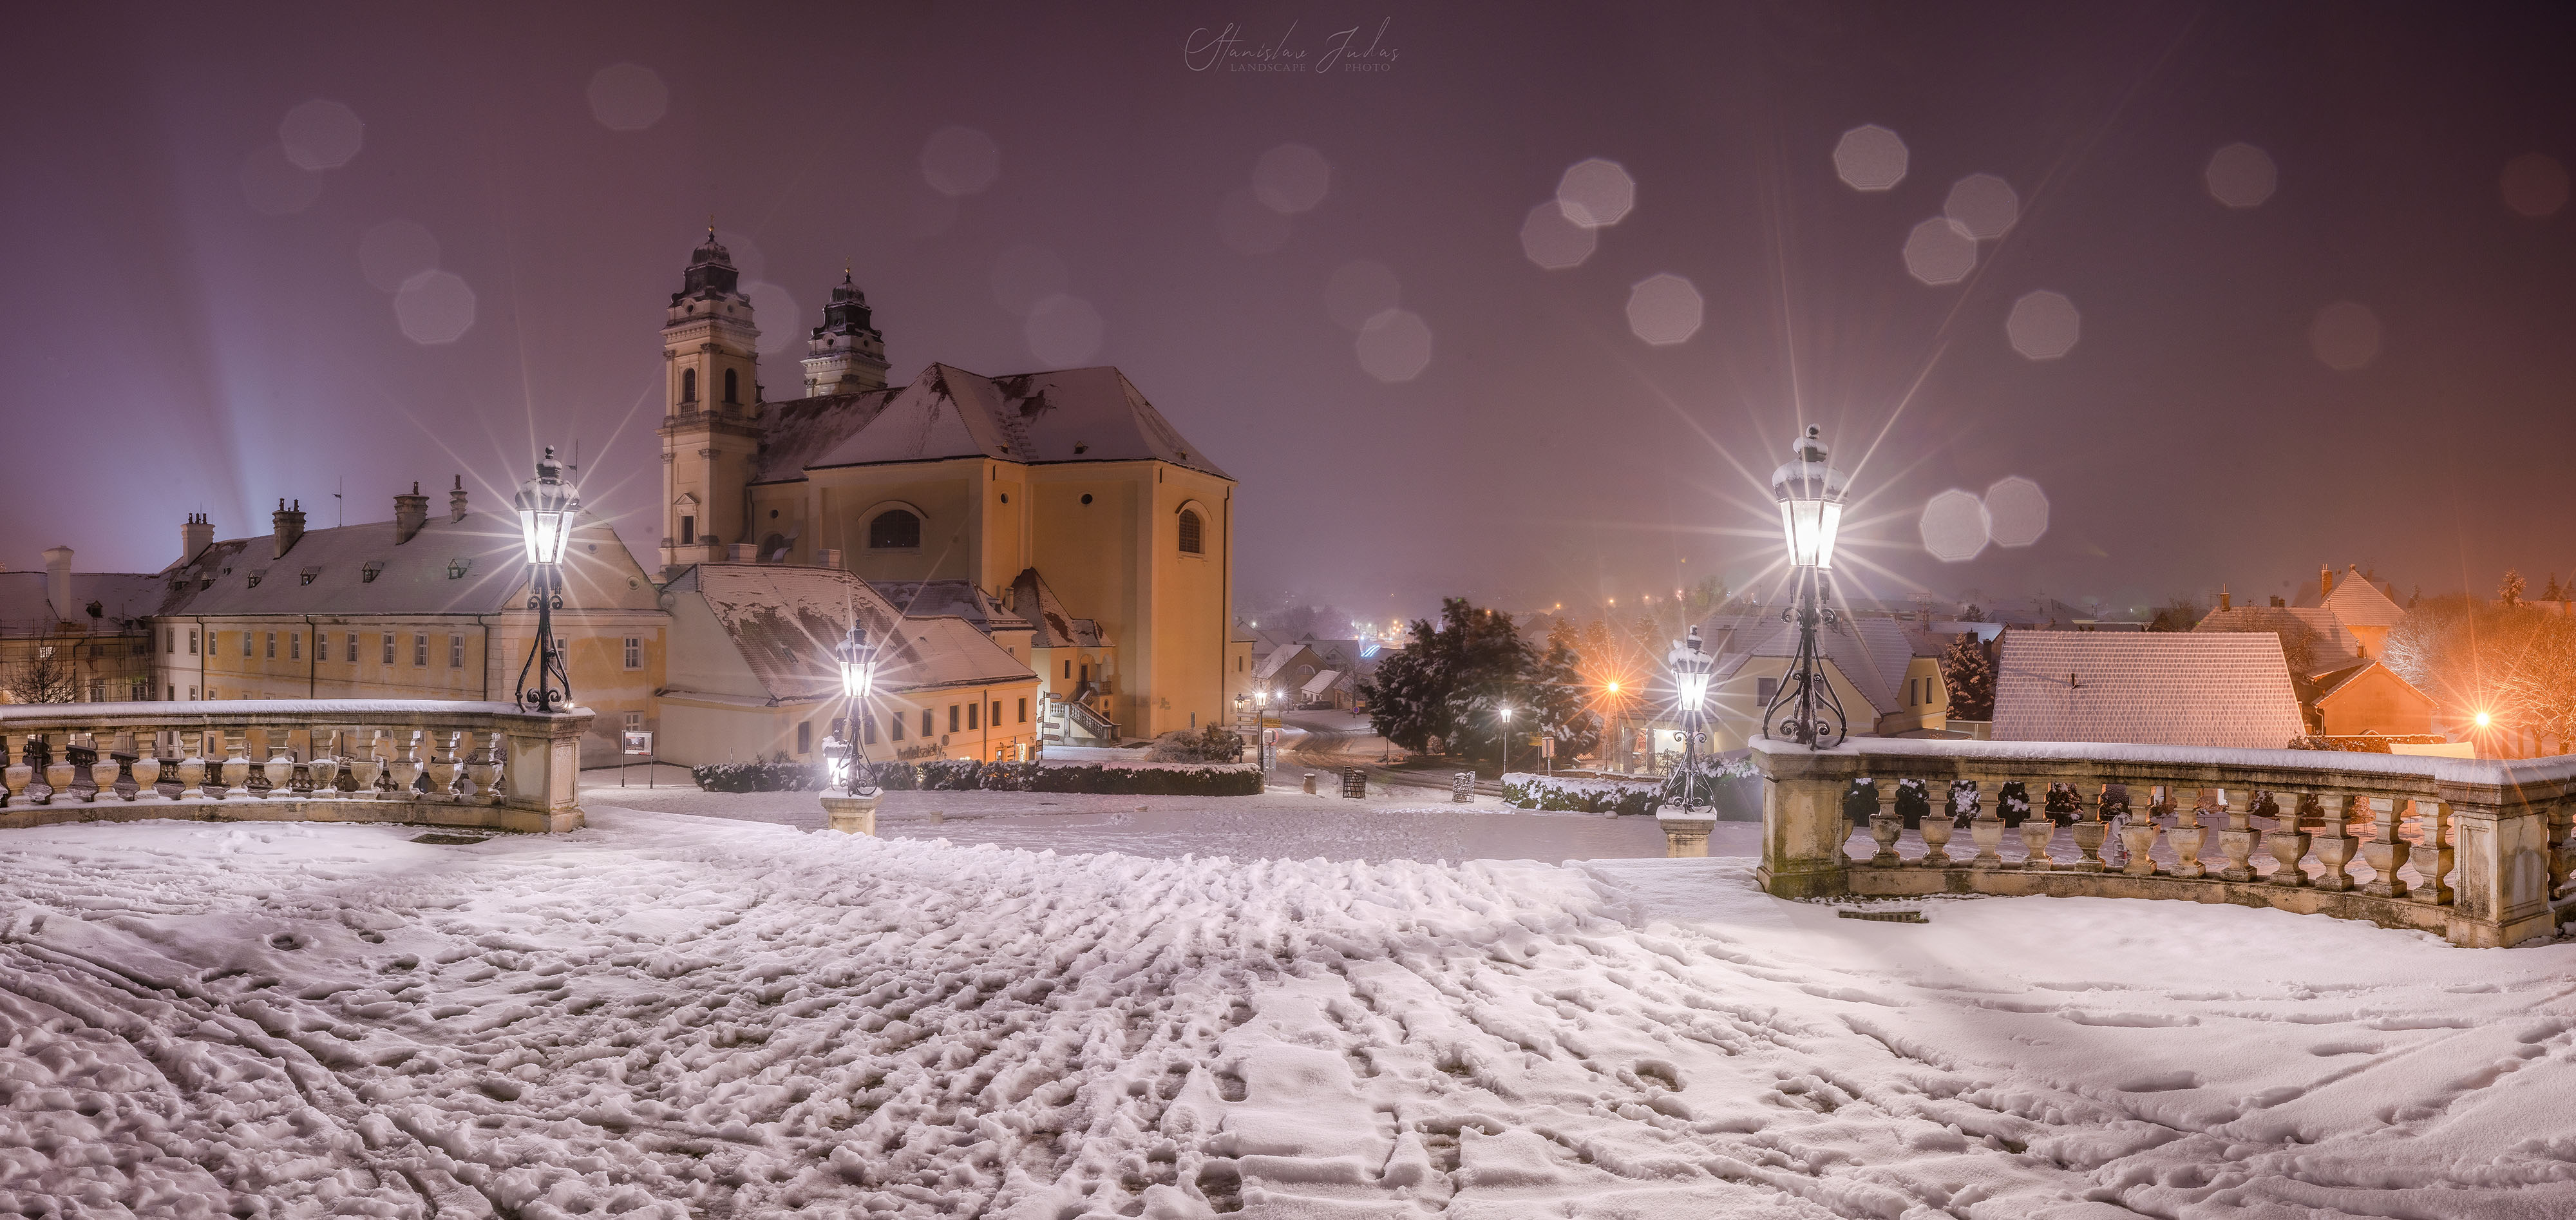 winter, valtice, landscape, city, castle, church, christmas, lights, snow, frost, Stanislav Judas